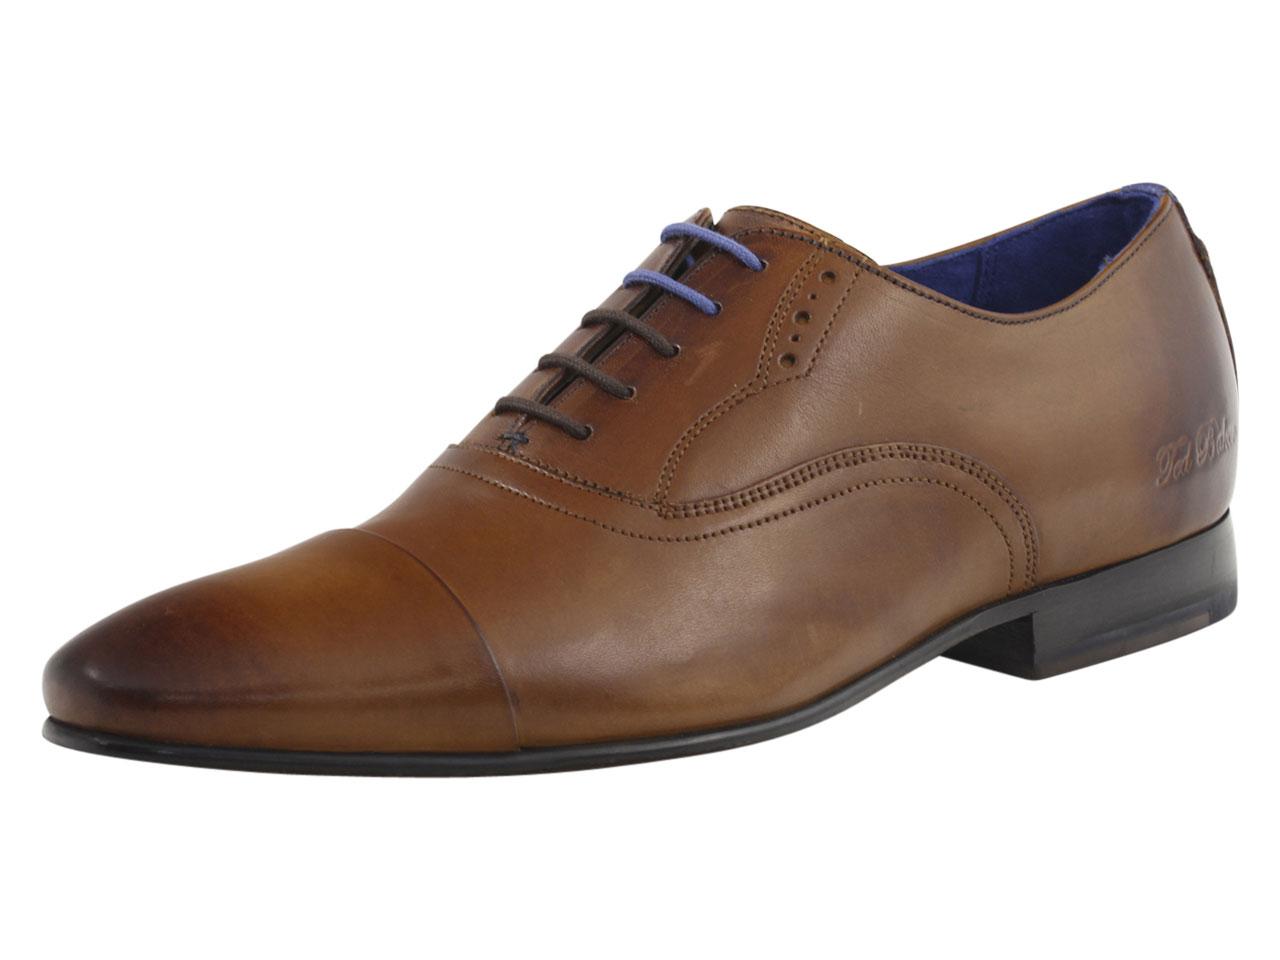 Ted Baker Men's Murain Fashion Oxfords Shoes - Brown - 9 D(M) US